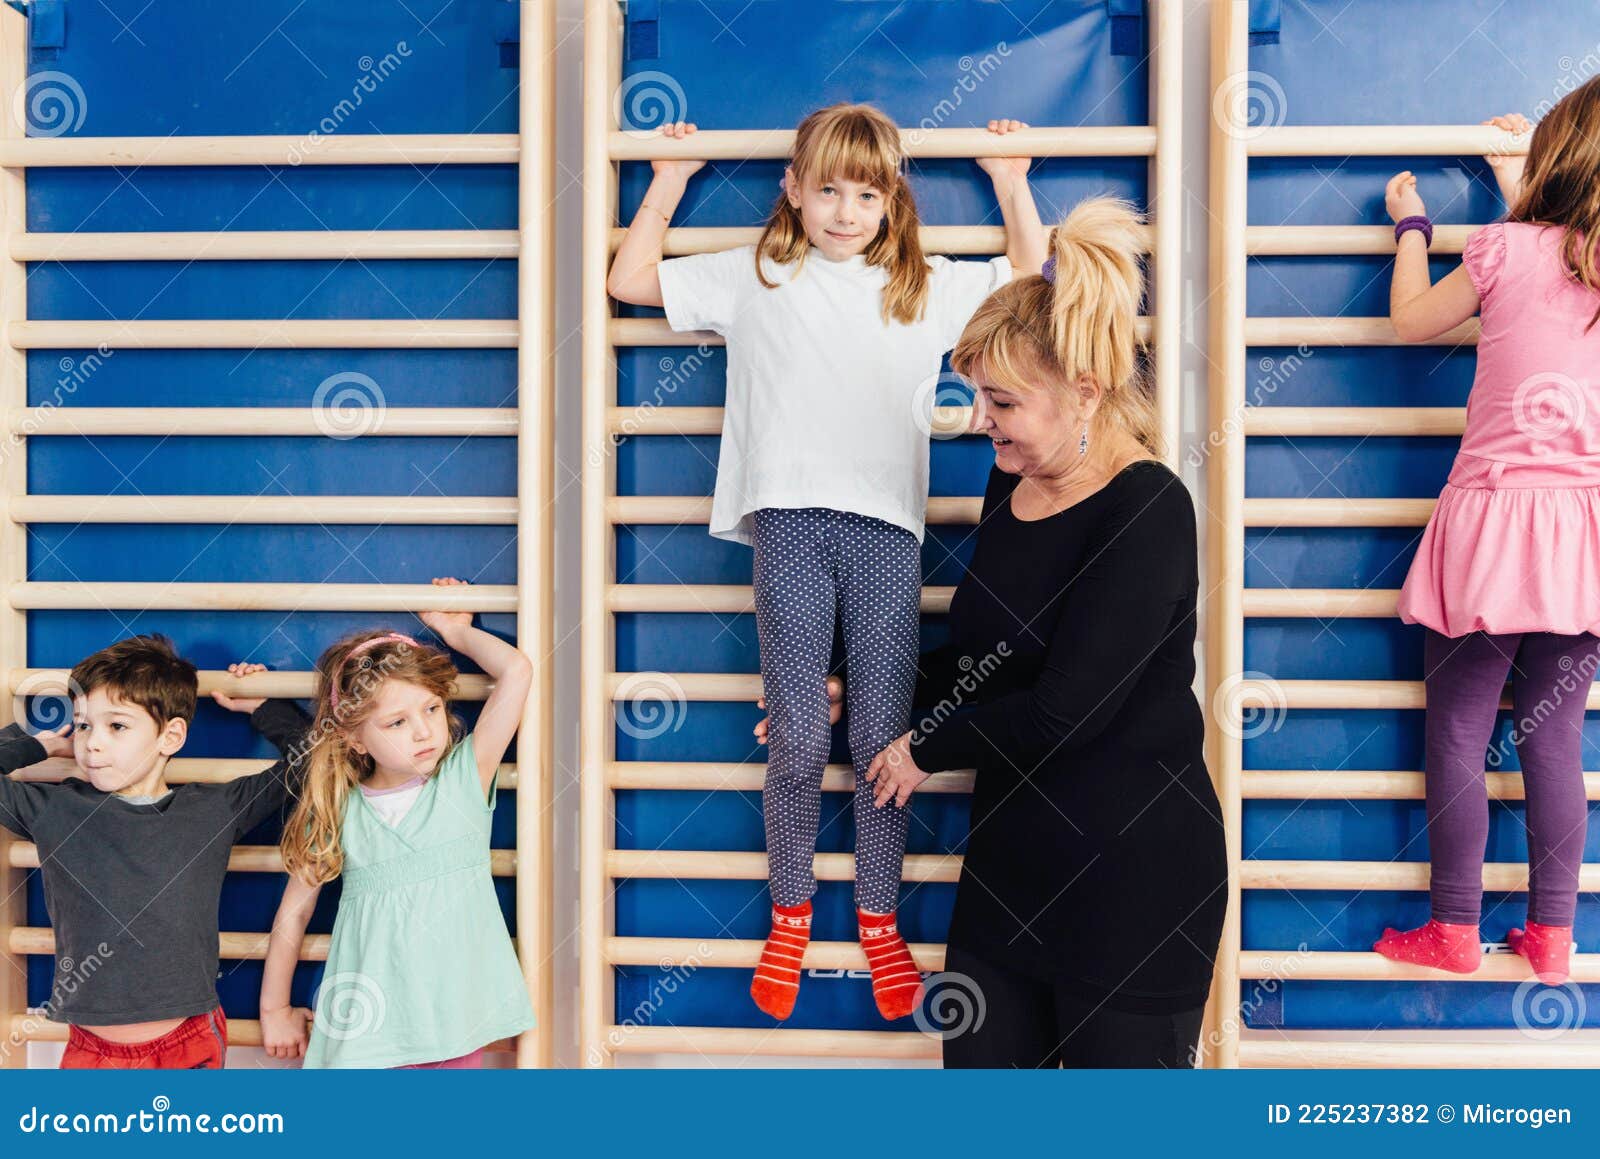 Children Climbing Wall Bars Stock Photo Image Of Selective Bars